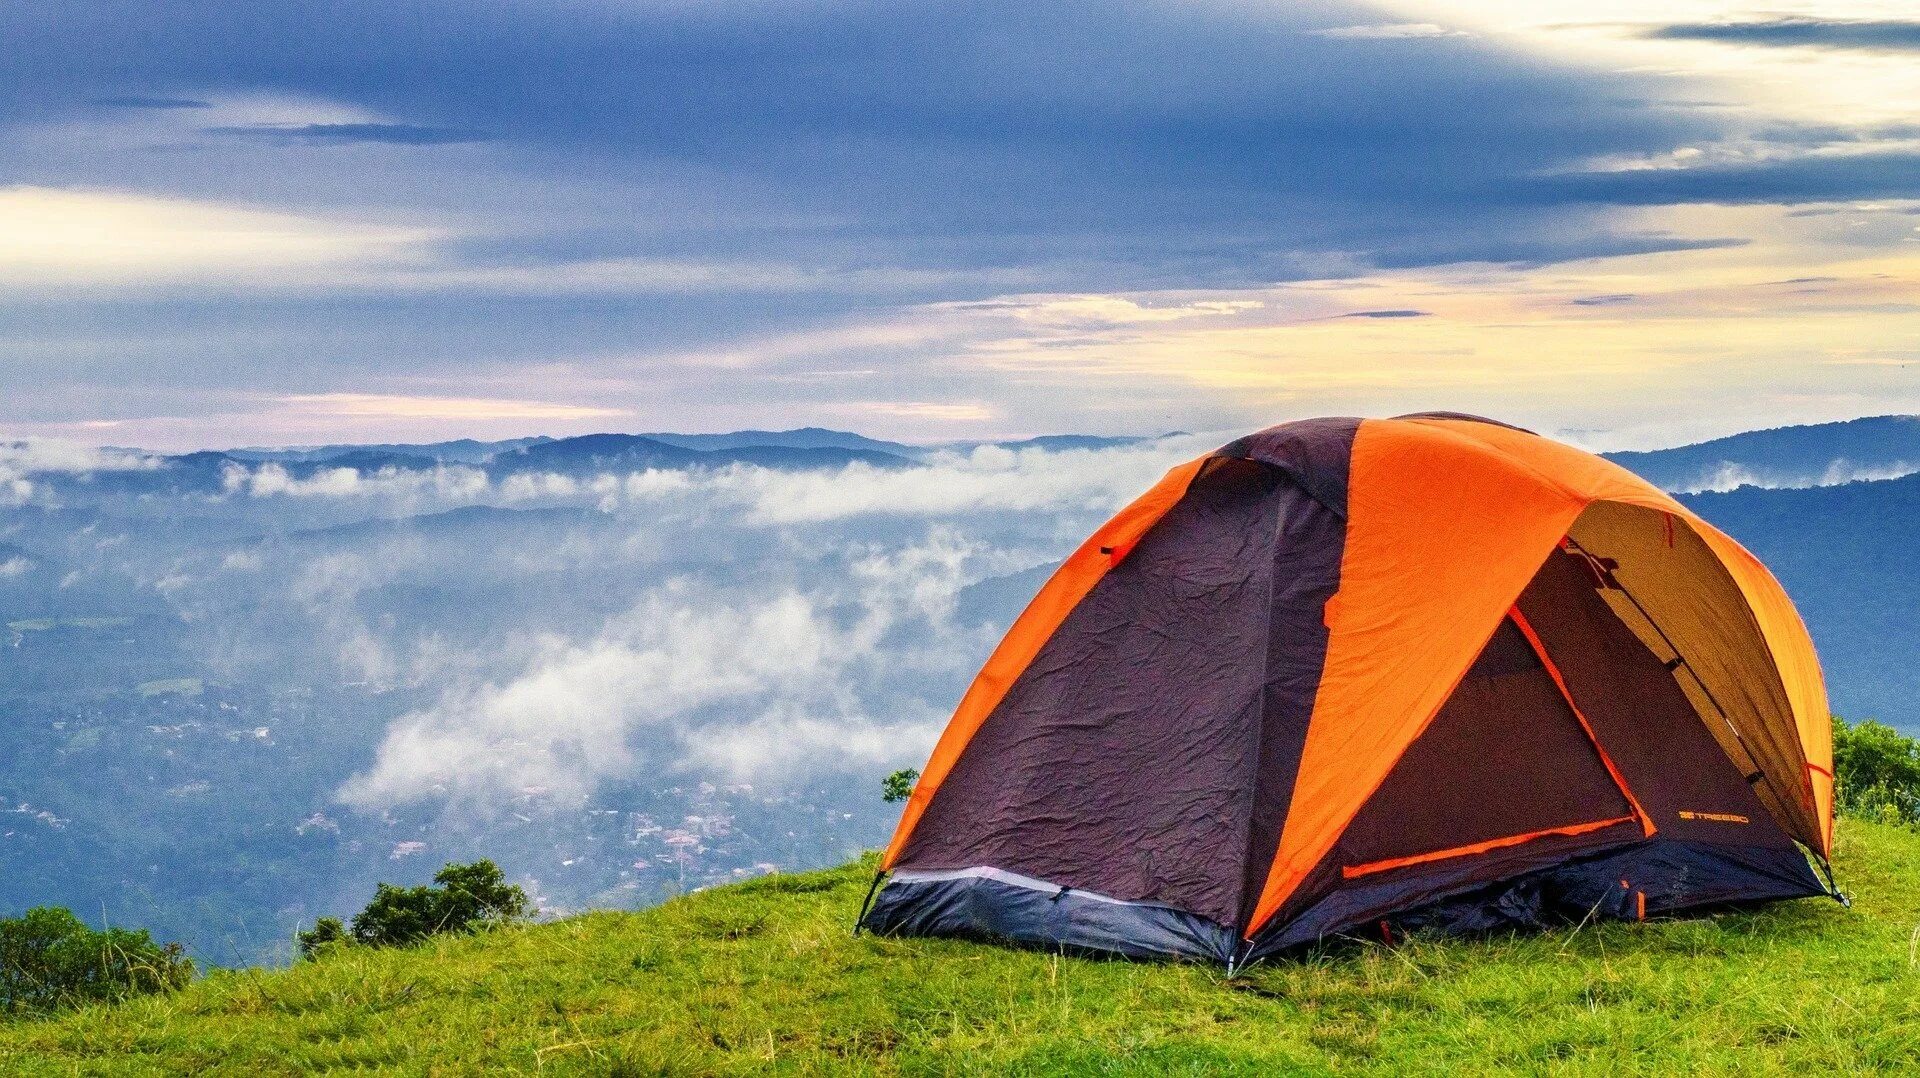 Палатка Camping Tent. Палатка Totem Summer 2 Plus. Миркампинг 2022 палатка. Палатка туристическая Outdoor Tent. Tourist camping